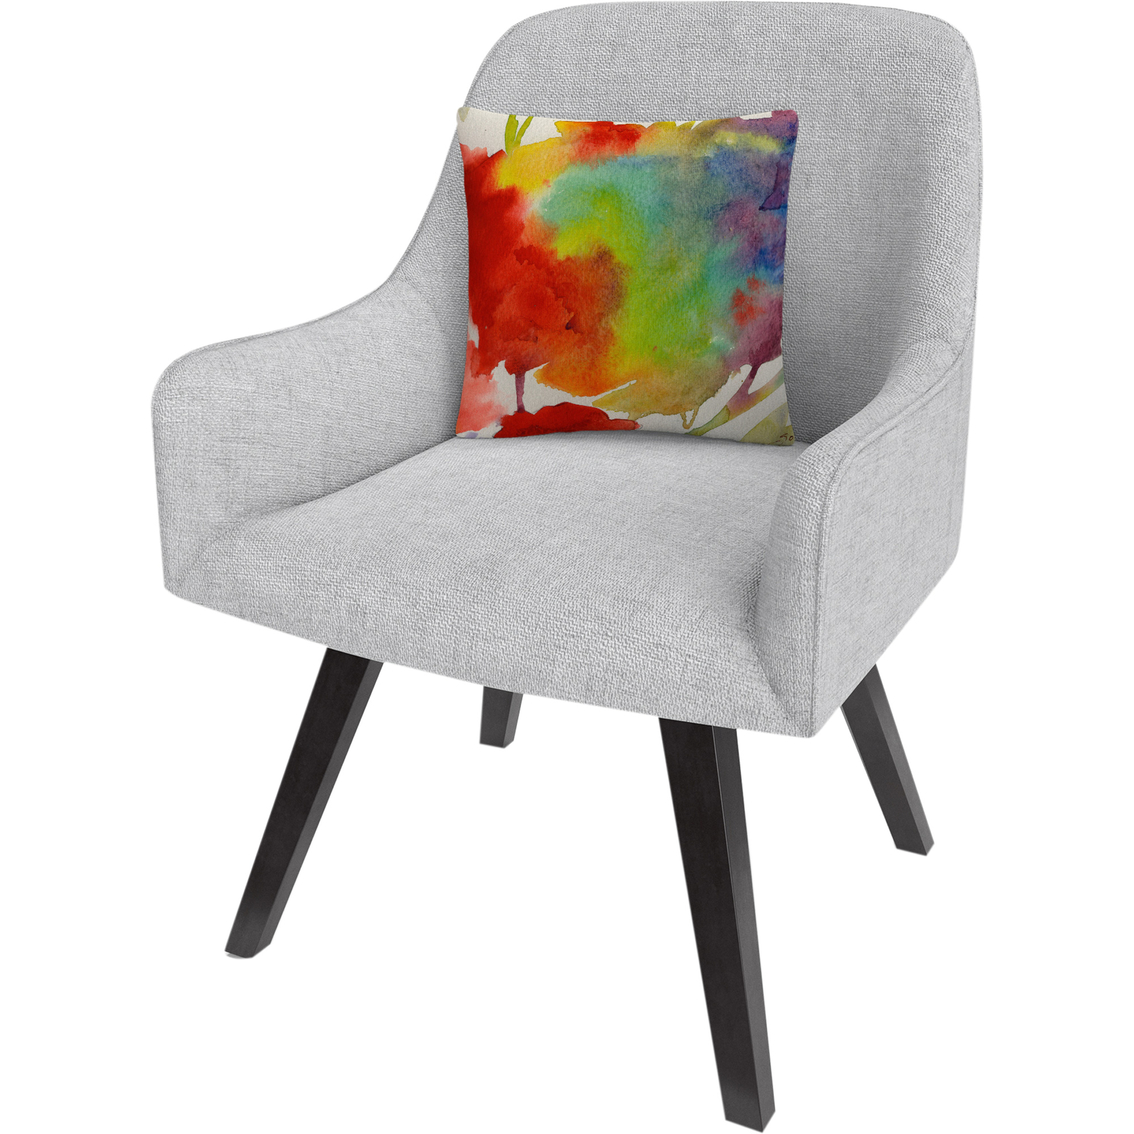 Trademark Fine Art Rainbow Flowers Abstract Bold Motif Decorative Throw Pillow - Image 2 of 2